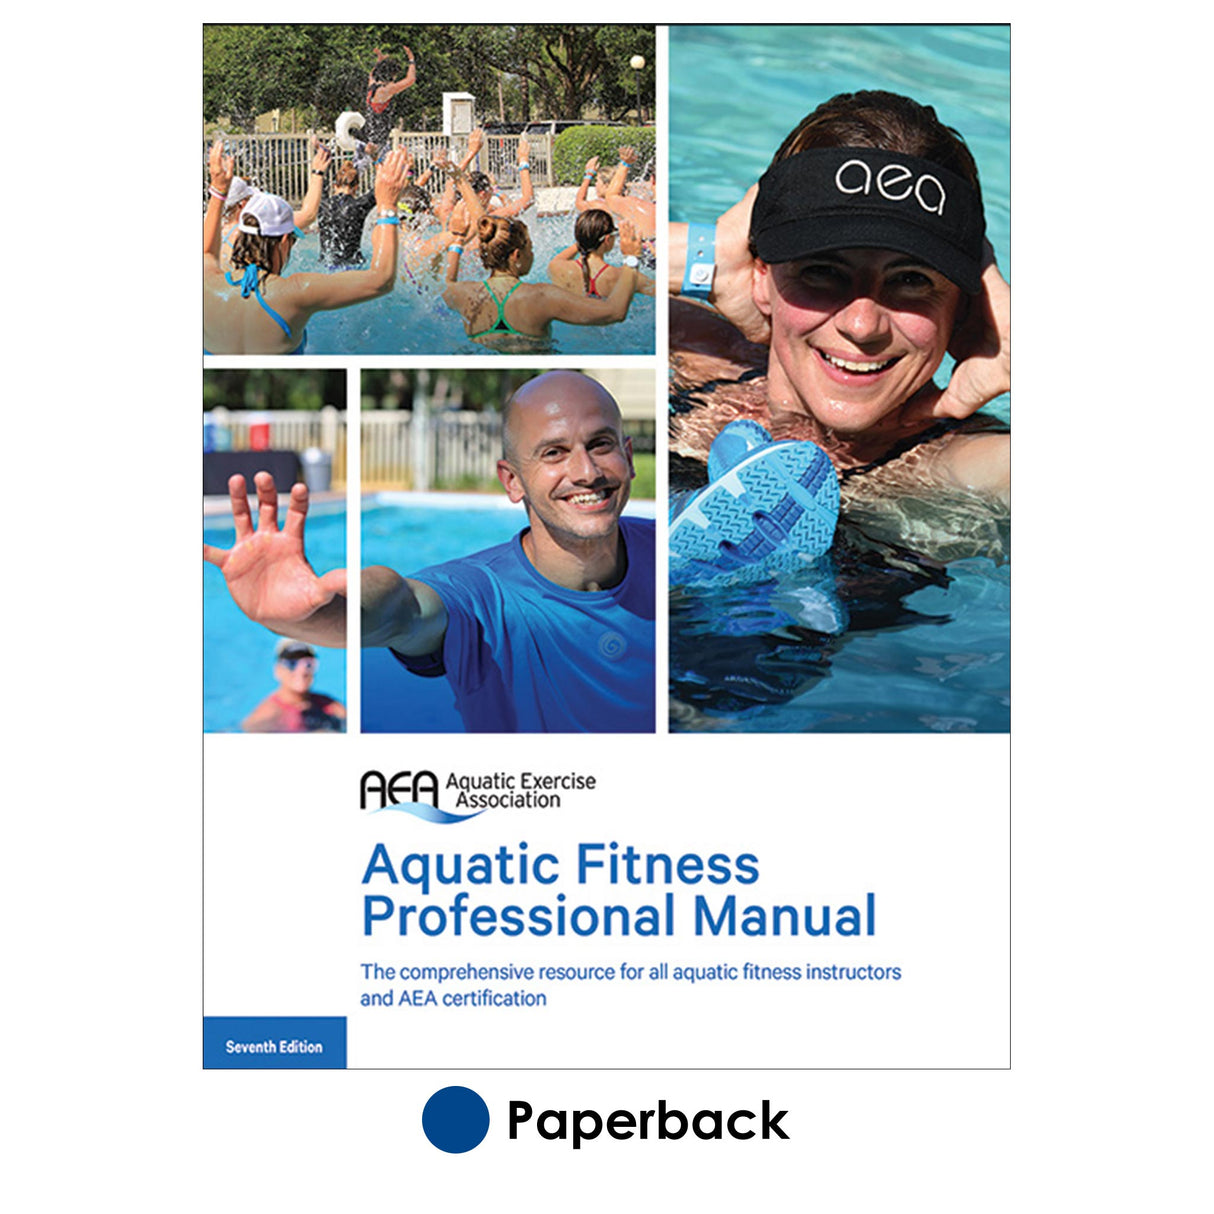 Aquatic Fitness Professional Manual-7th Edition